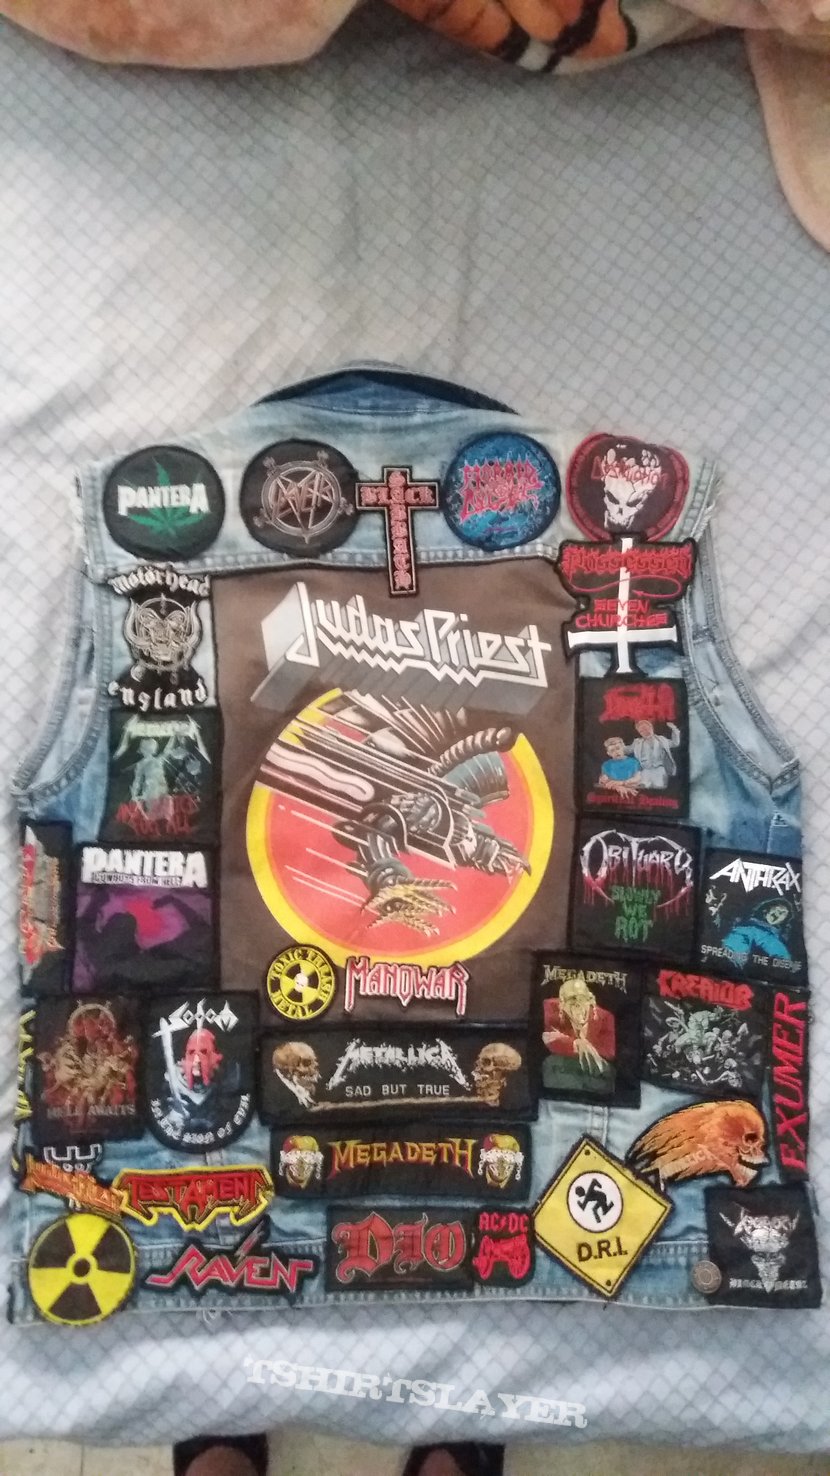 Judas Priest Metal Vest update